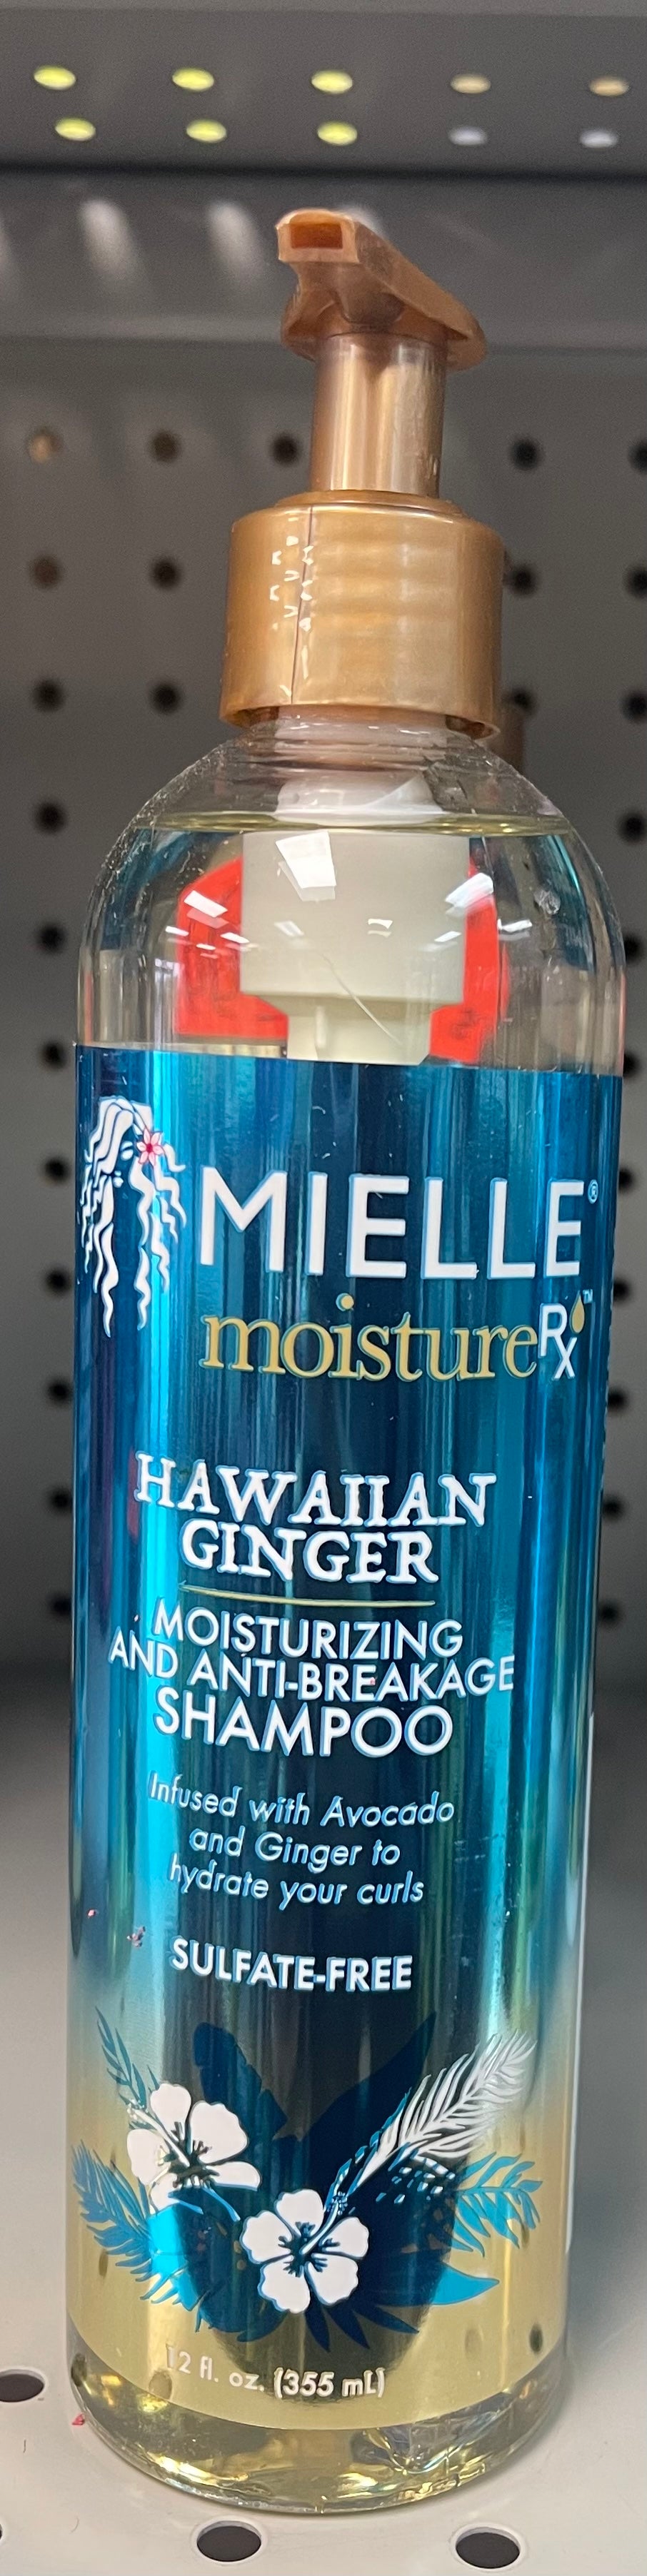 Mielle Hawaiian Ginger Moisturizing And Anti-Breakage Shampoo